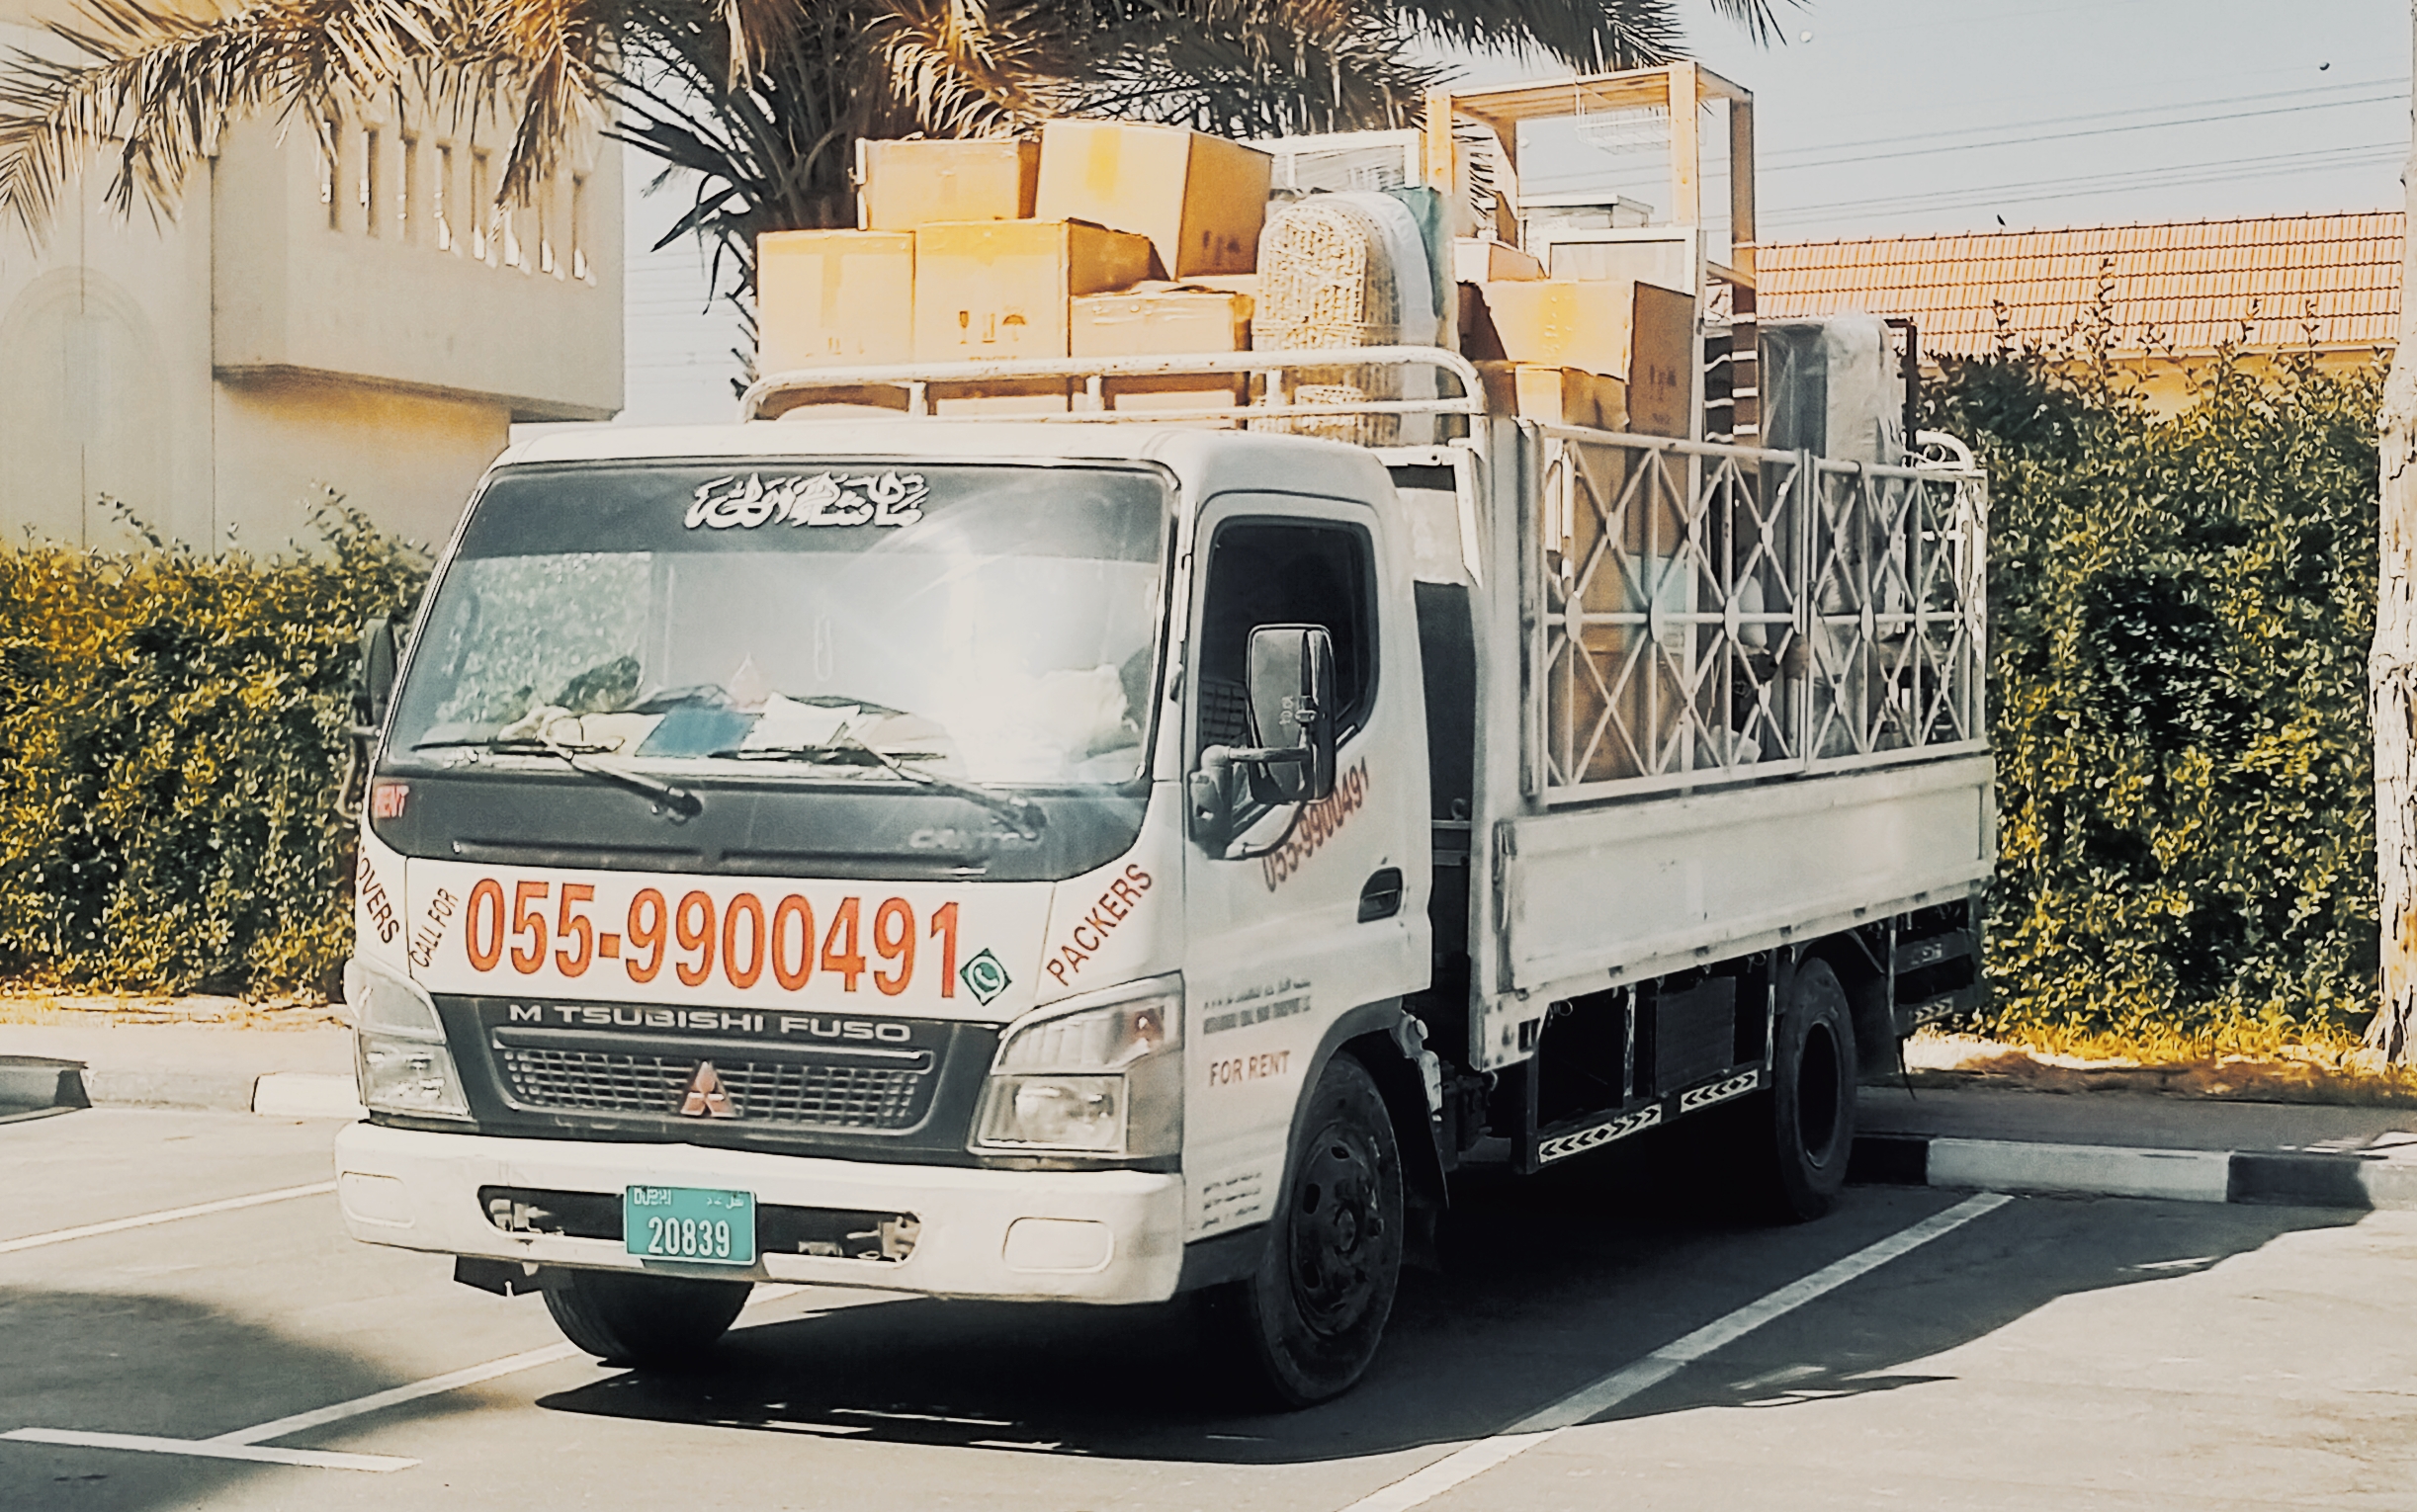 Movers Packers service Dubai UAE 0559900491